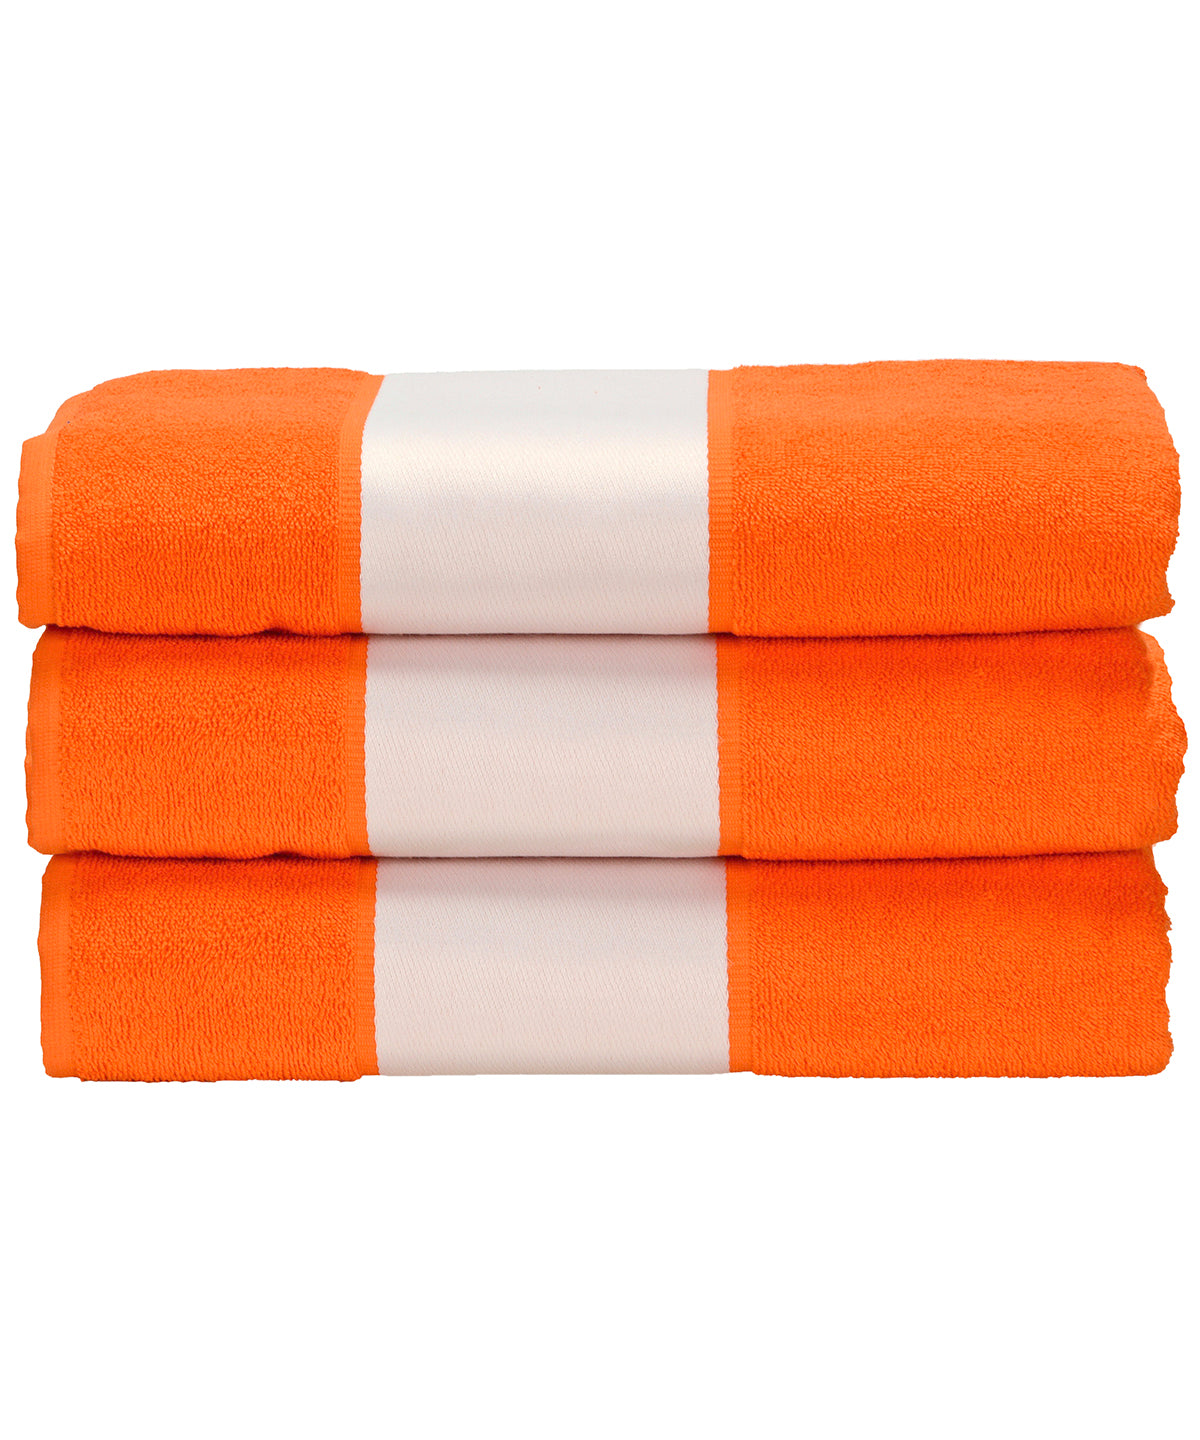 Personalised Towels - Mid Orange A&R Towels ARTG® SUBLI-Me® hand towel